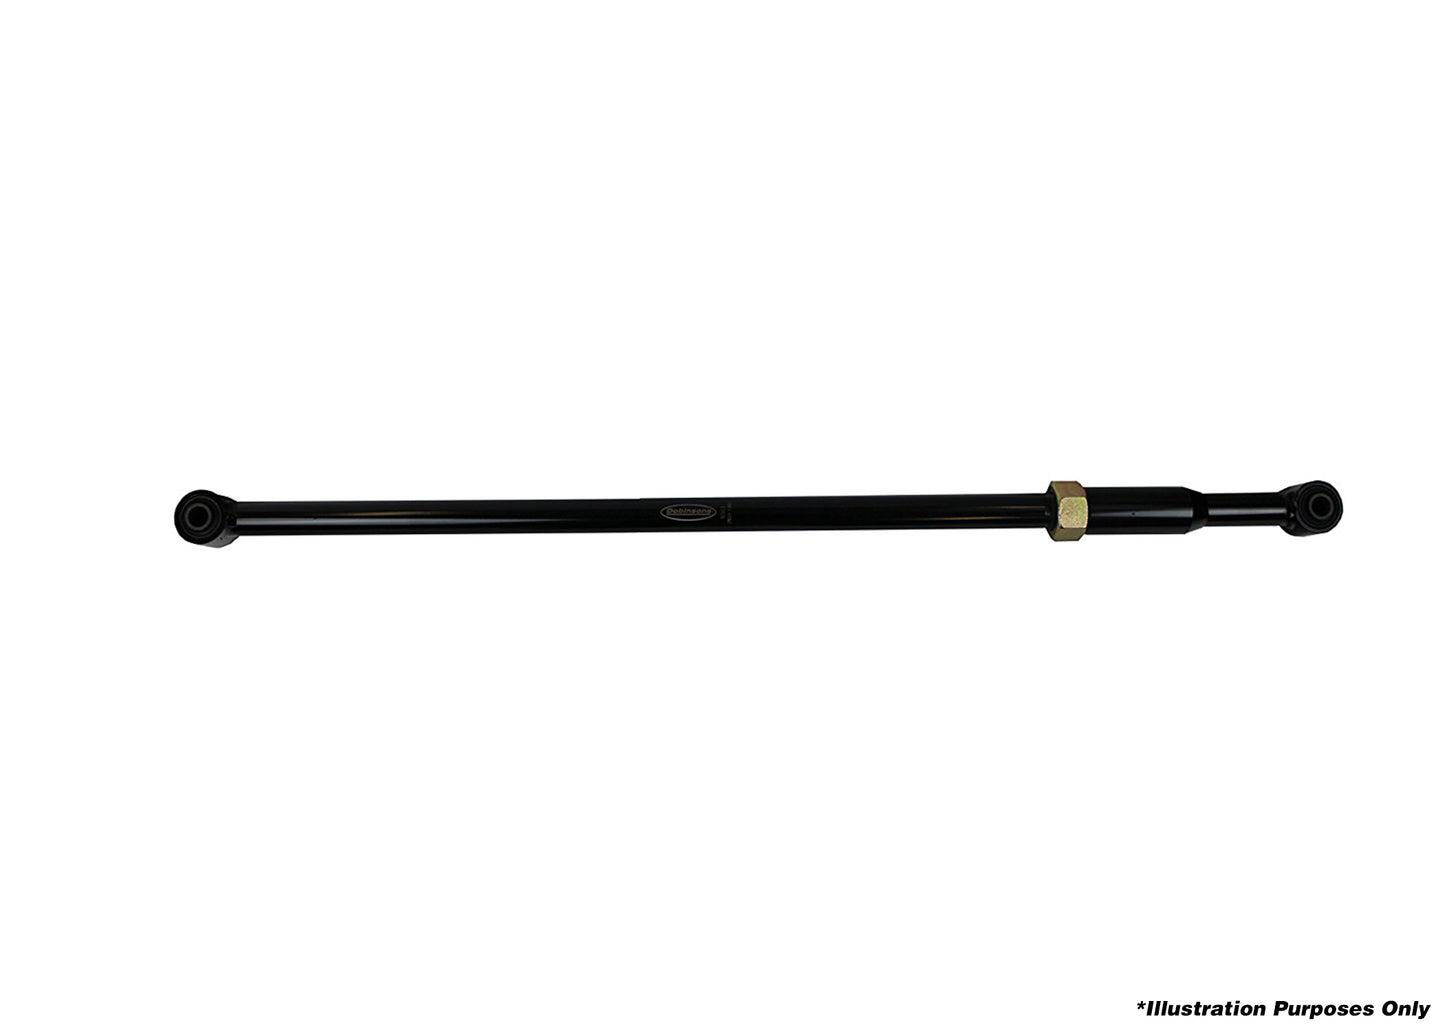 Dobinsons Rear Adjustable Panhard Rod Track Bar for Toyota Land Cruiser 200 Series(PR59-1421) - PR59-1421